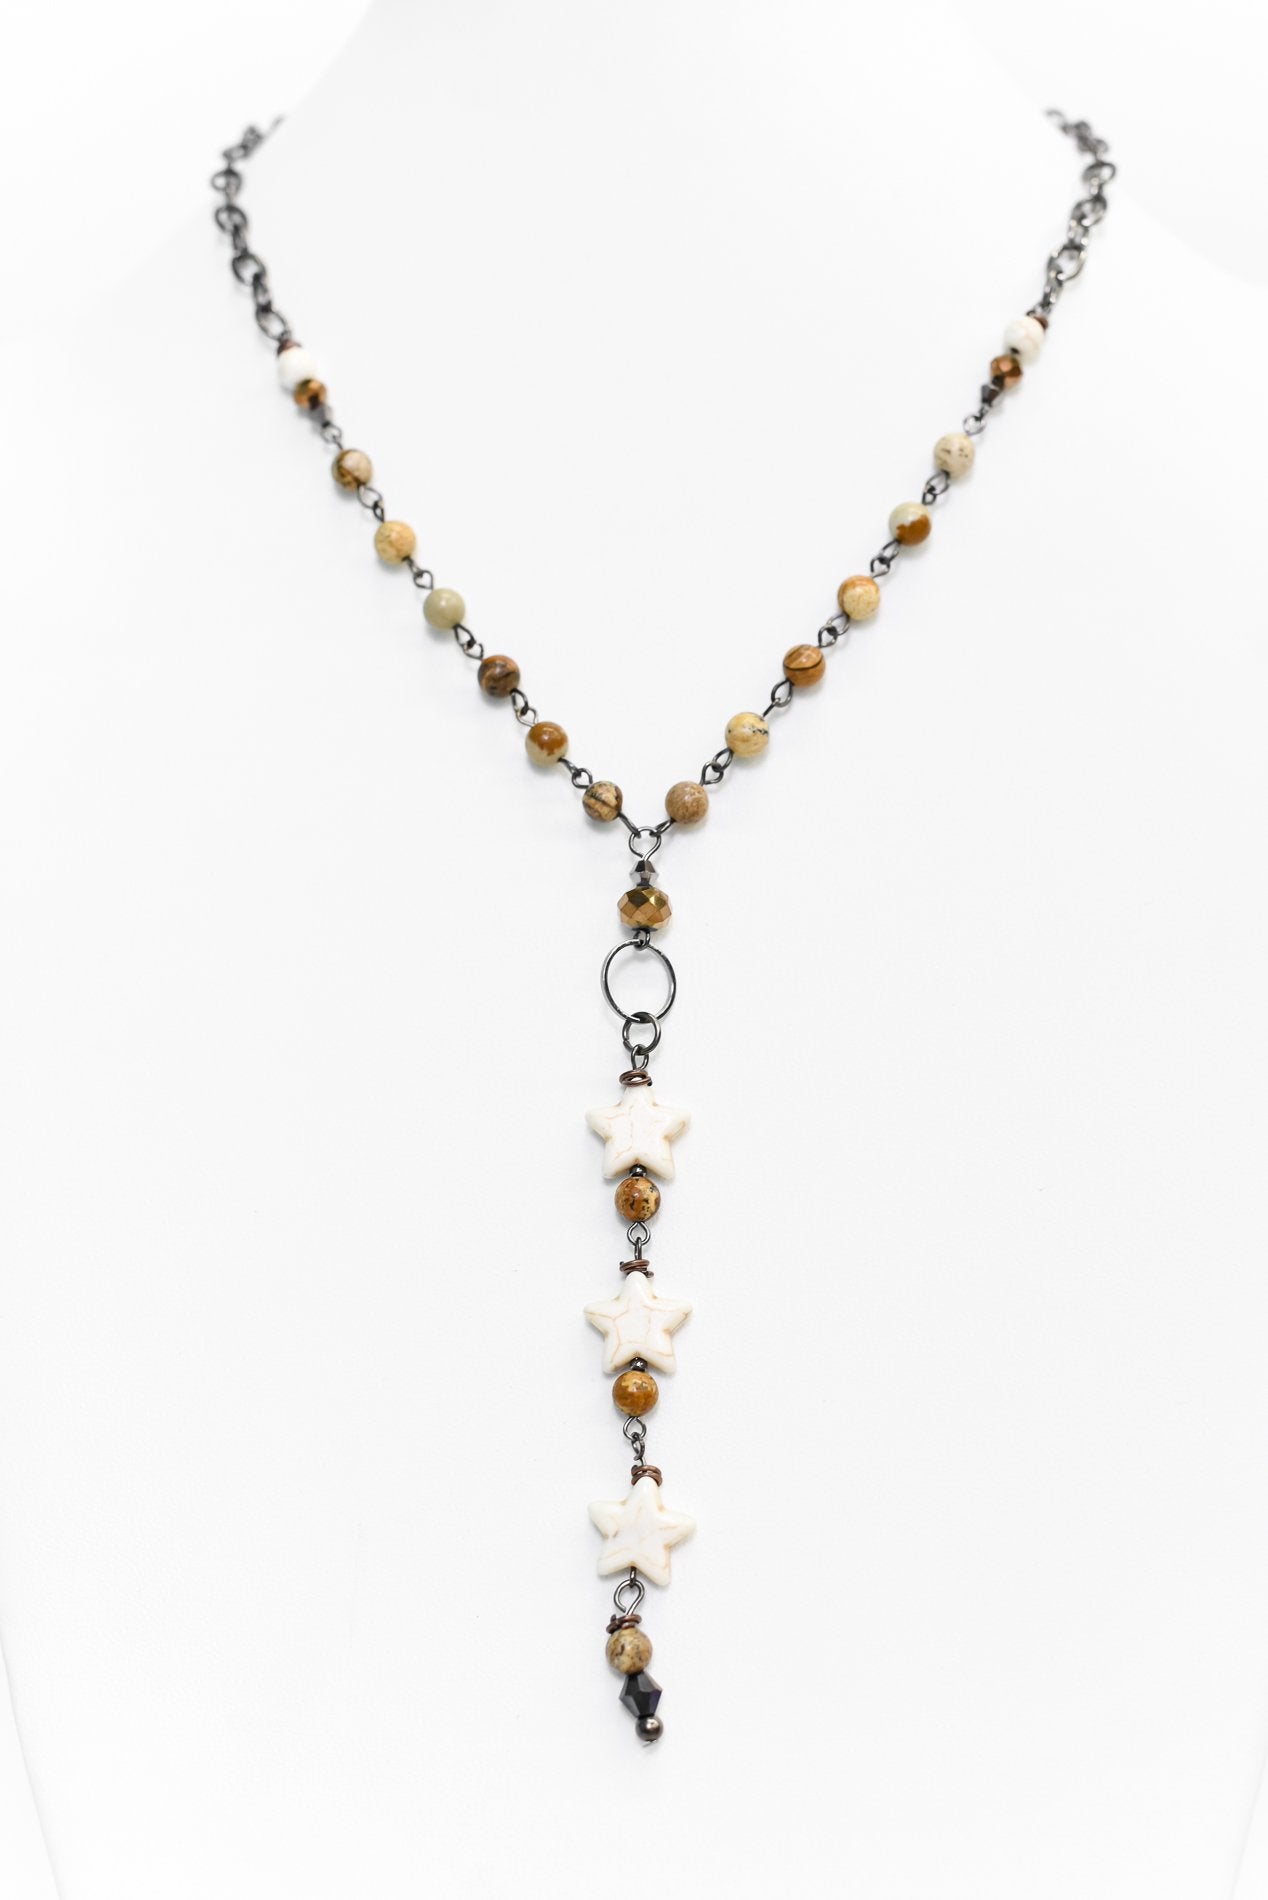 Brown Marble Beaded/Ivory Star Tassel On Platinum Chain Necklace - NEK3444BR